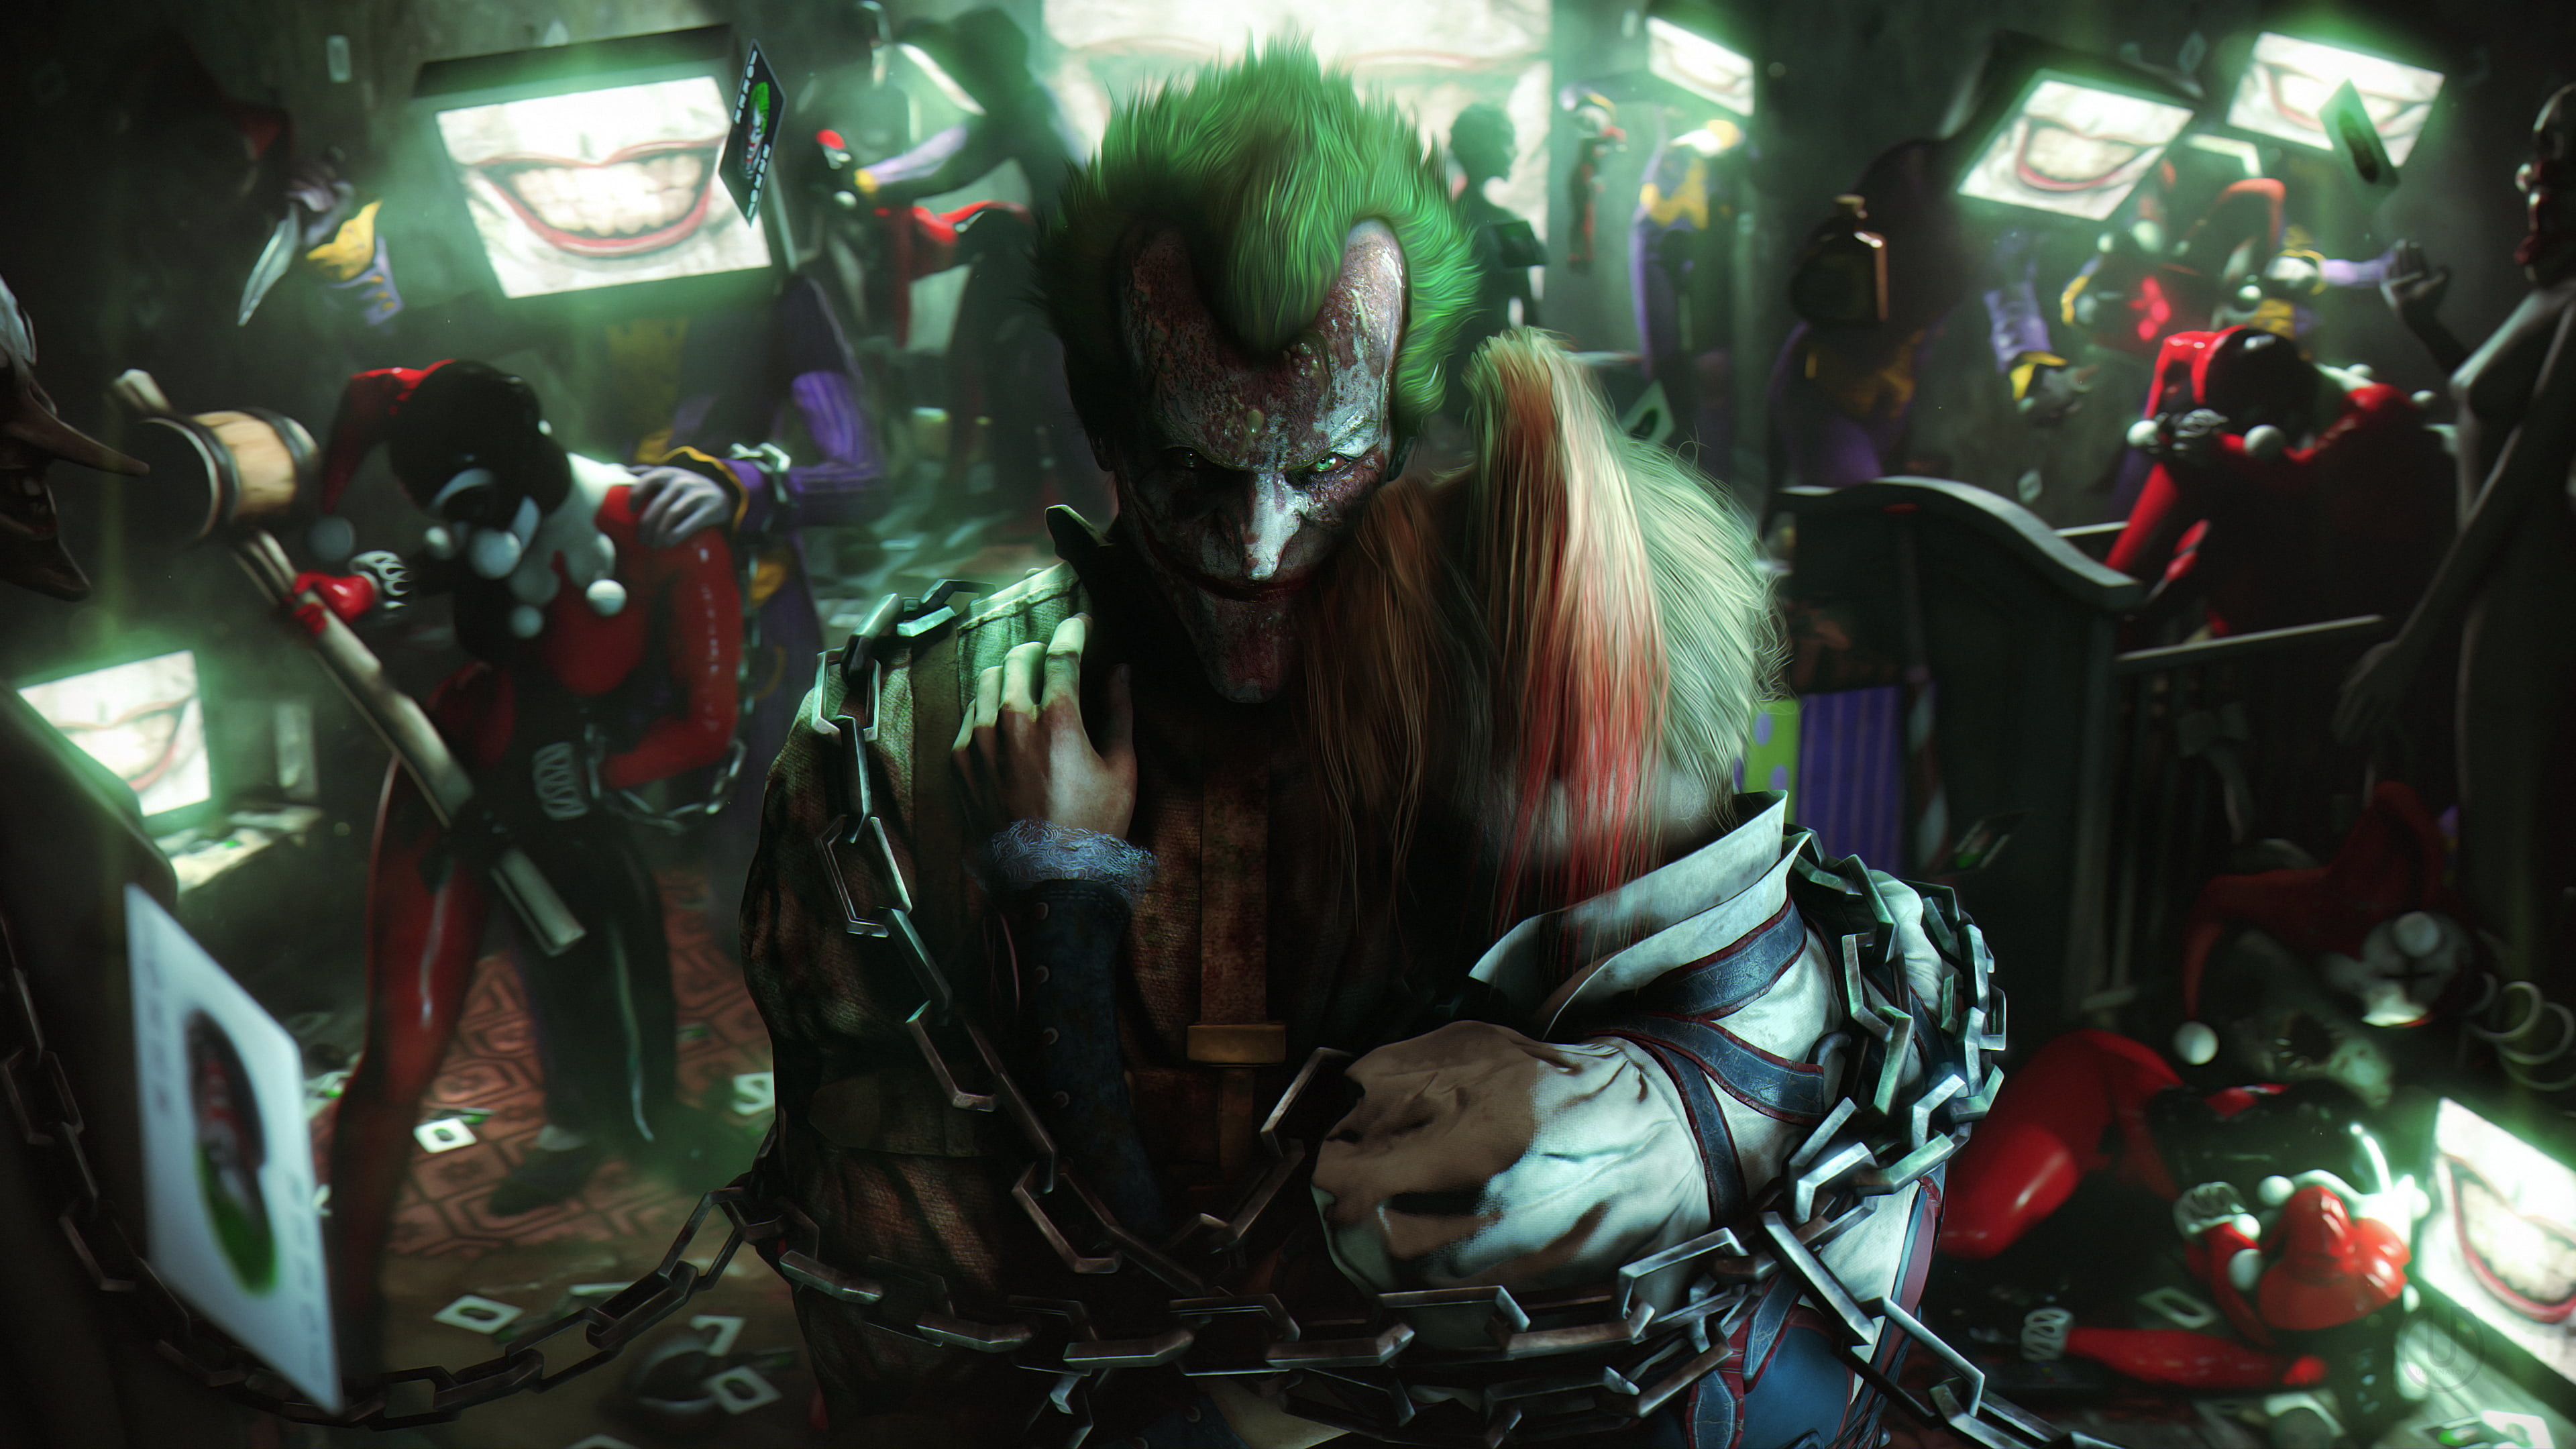 3840x2160 Harley Quinn and The Joker fanart, Urbanator, Batman: Arkham Knight, fan art